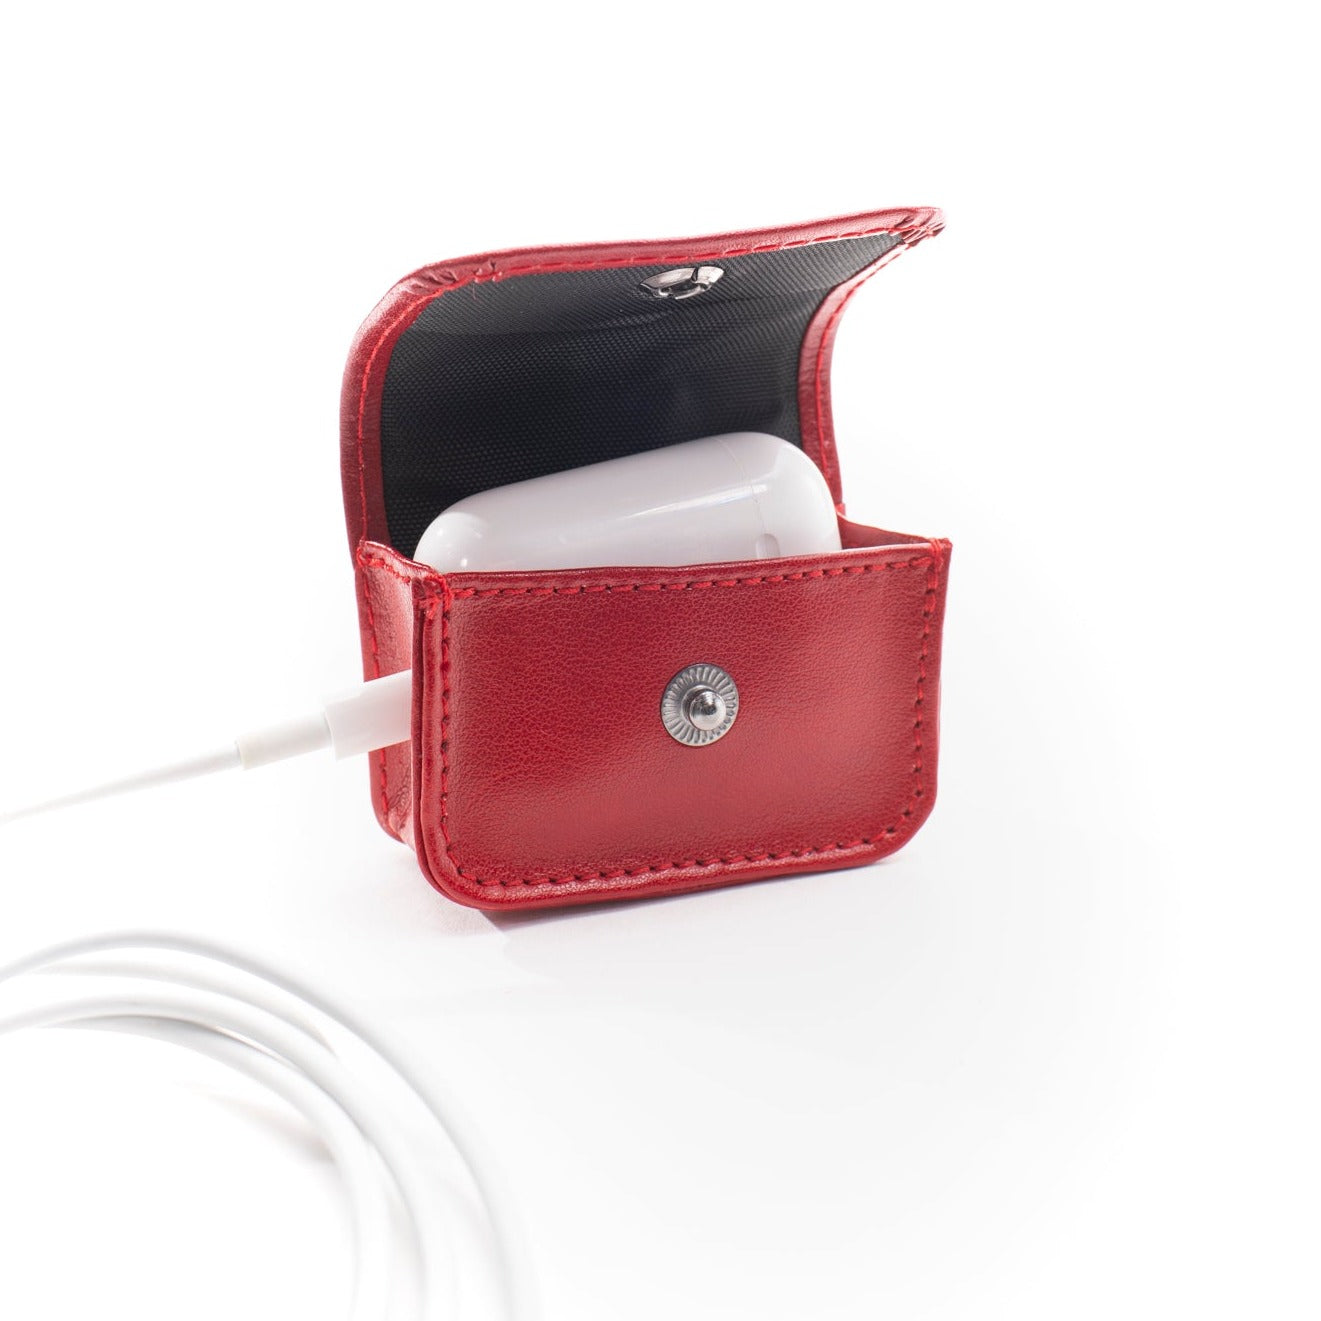 Earbud Pro Case - Ruby Red - Gunmetal Toned Hardware